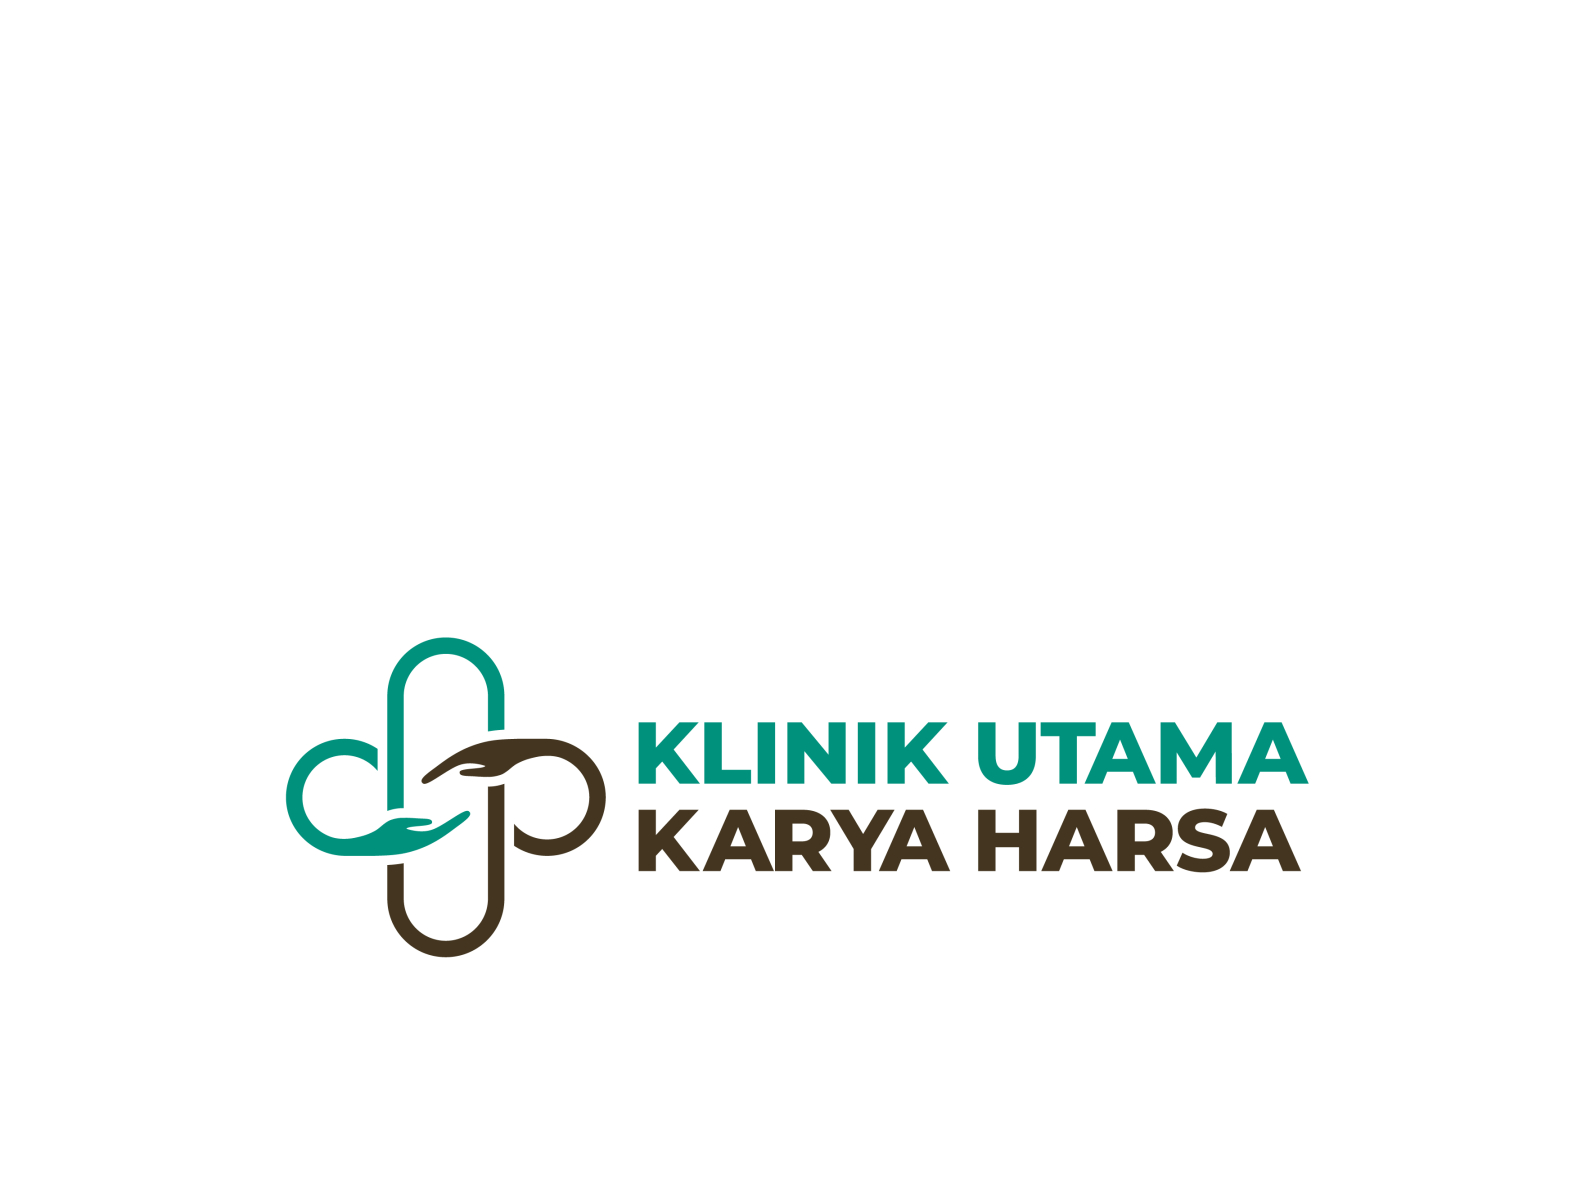 Klinik Utama Karya Harsa By - Soca Desain by Soca Kreatif Pedia on Dribbble